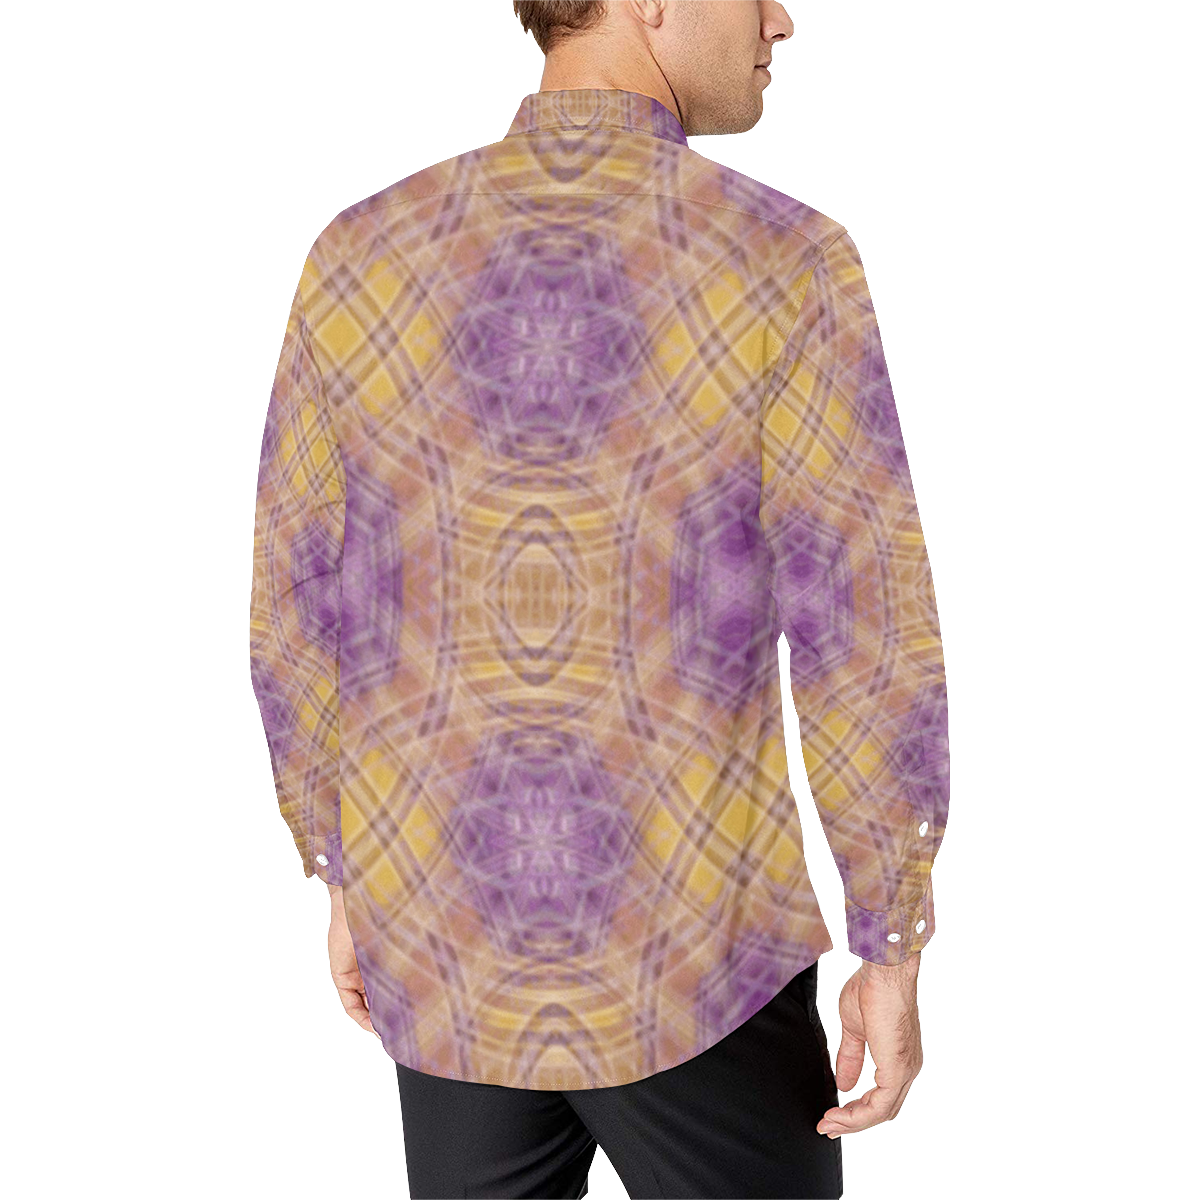 Rise of the Dragon - gold purple double diamond plaid pattern Men's All Over Print Casual Dress Shirt (Model T61)